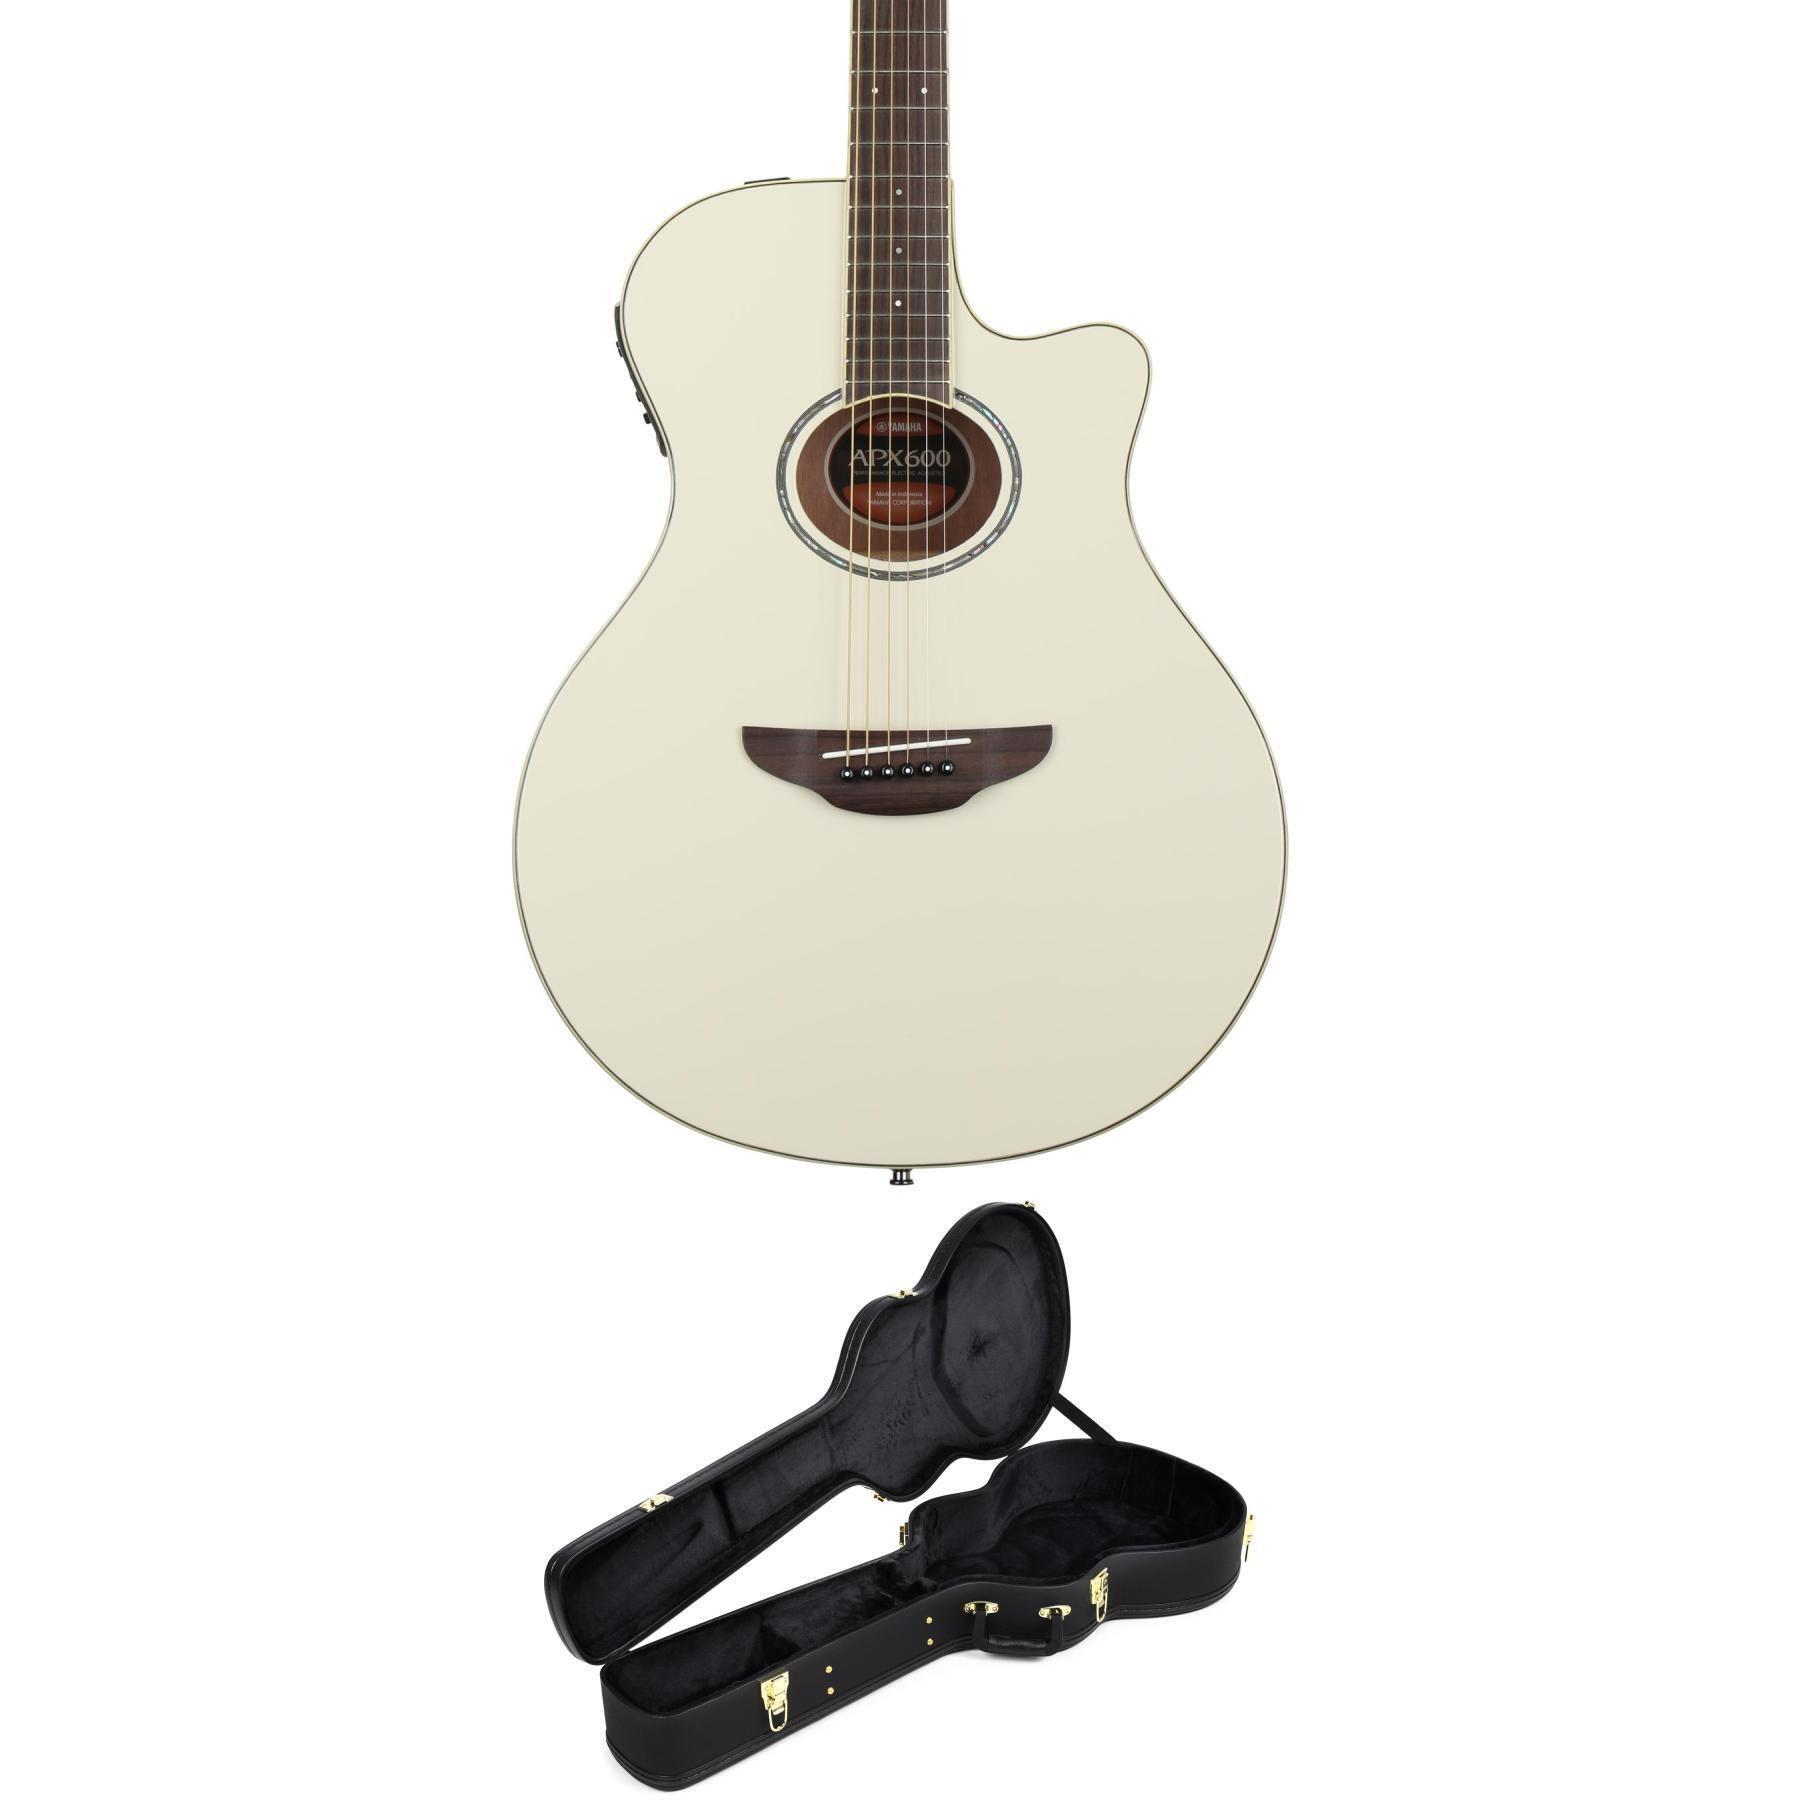 Yamaha APX600 Thinline Acoustic Guitar, Vintage White